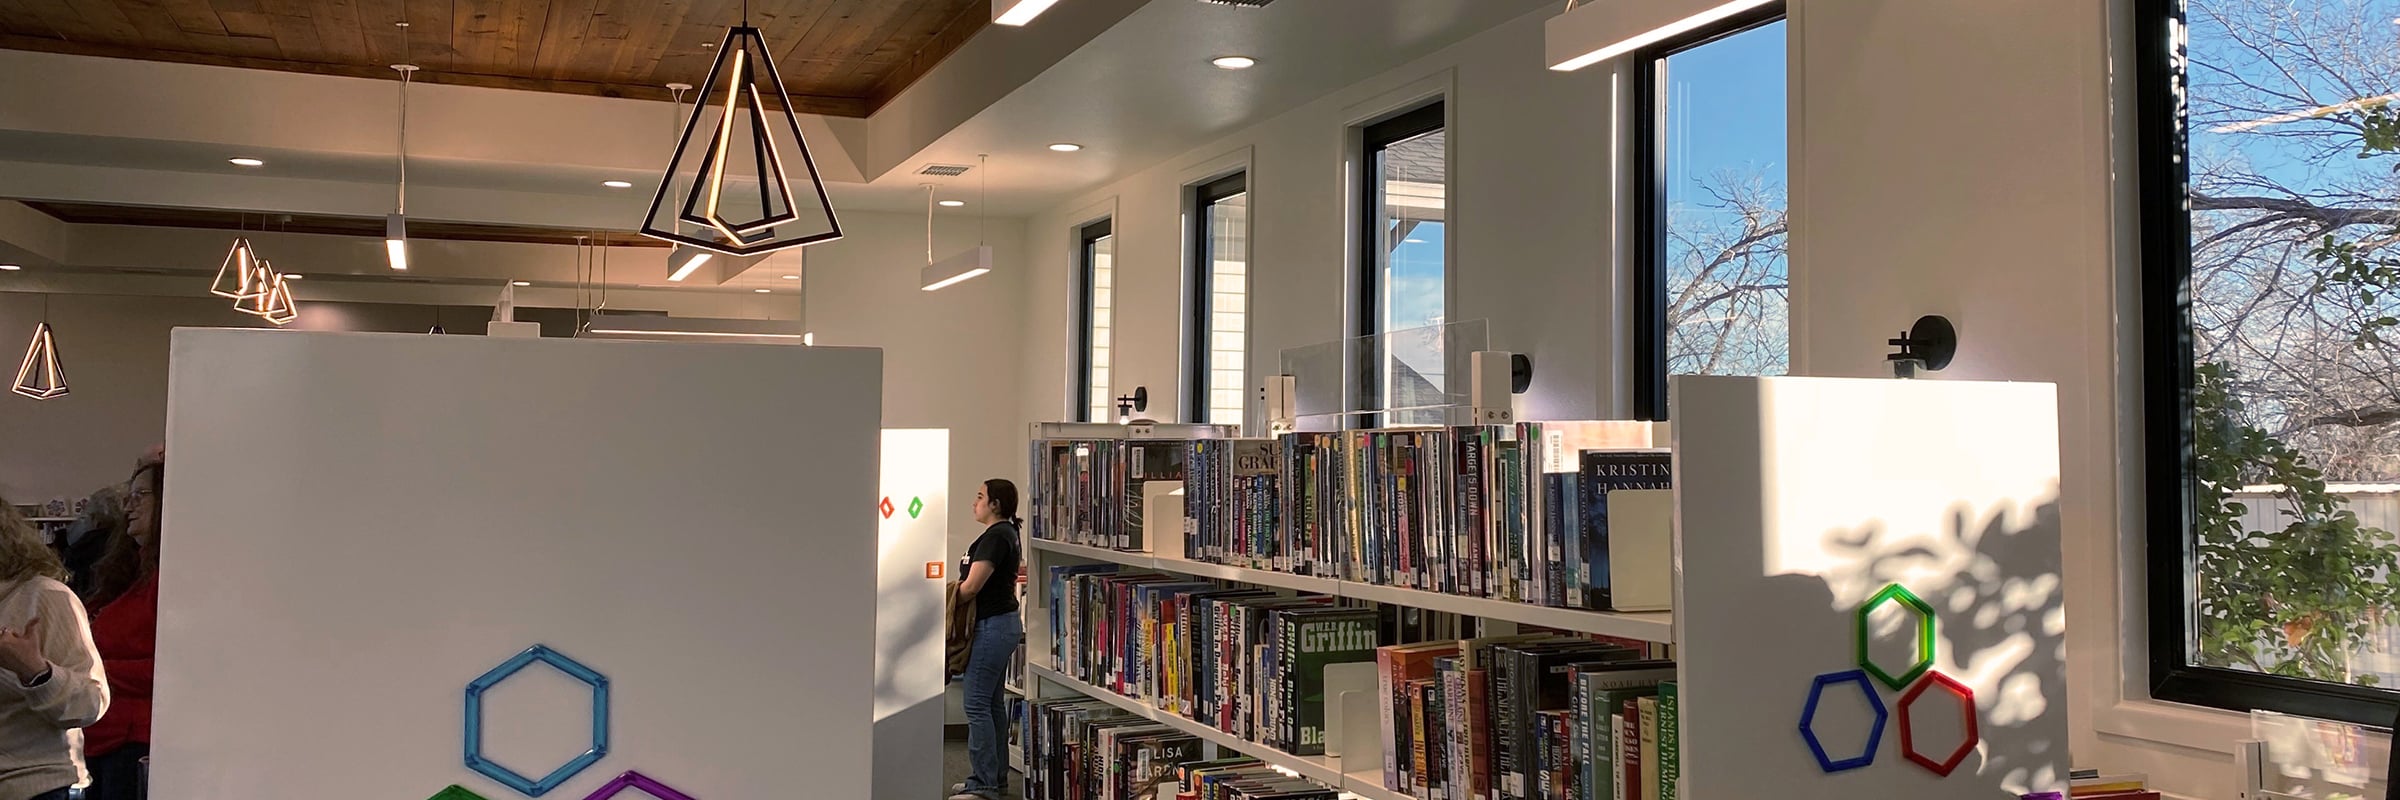 modern bright library stacks